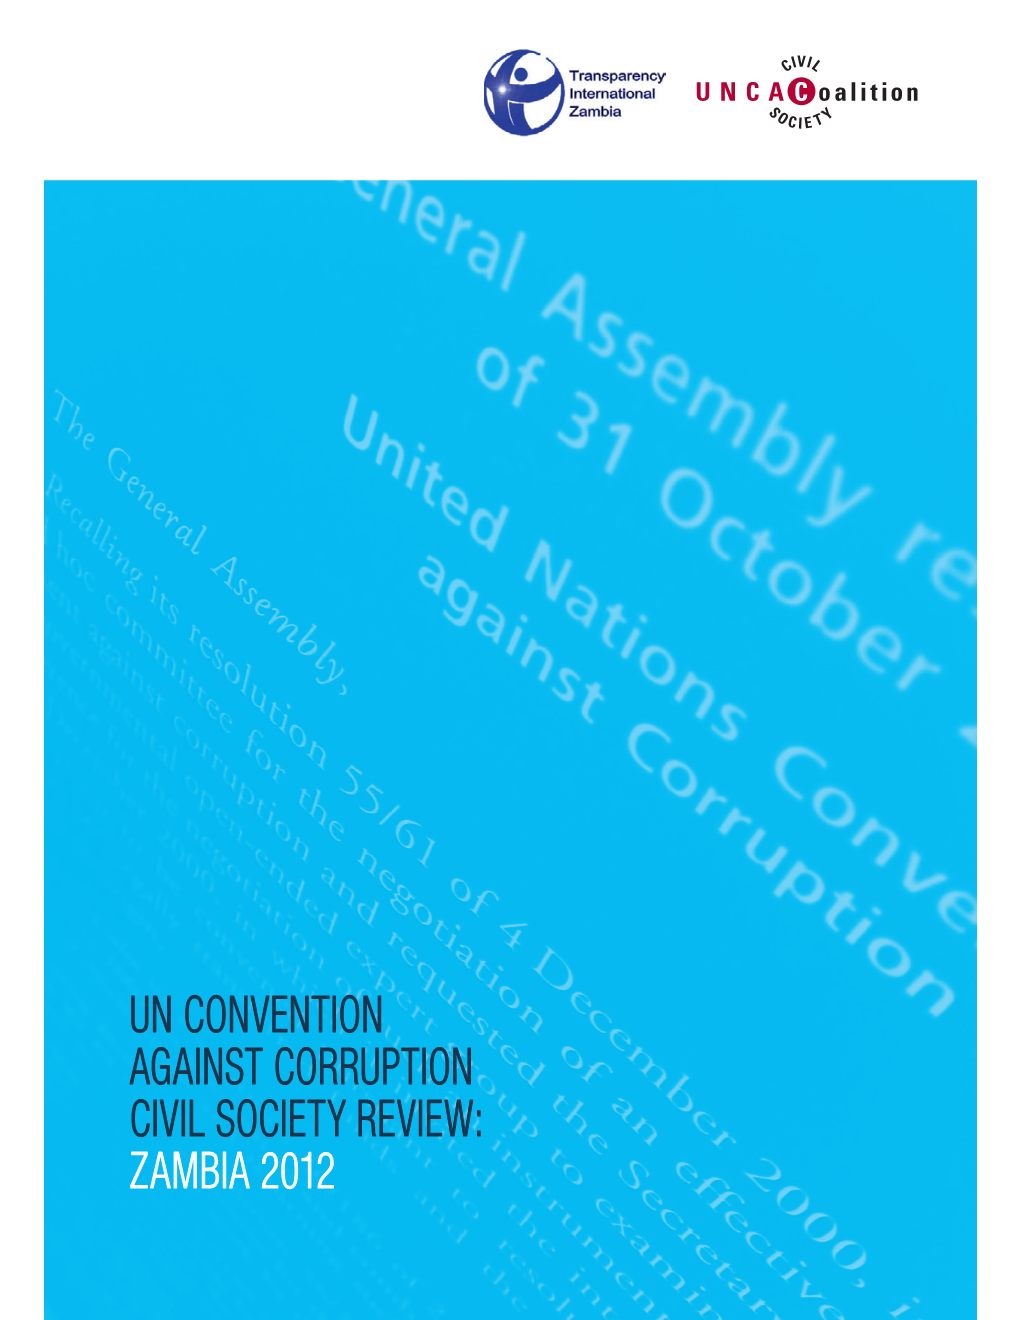 UN CONVENTION AGAINST CORRUPTION CIVIL SOCIETY REVIEW: ZAMBIA 2012 Context and Purpose